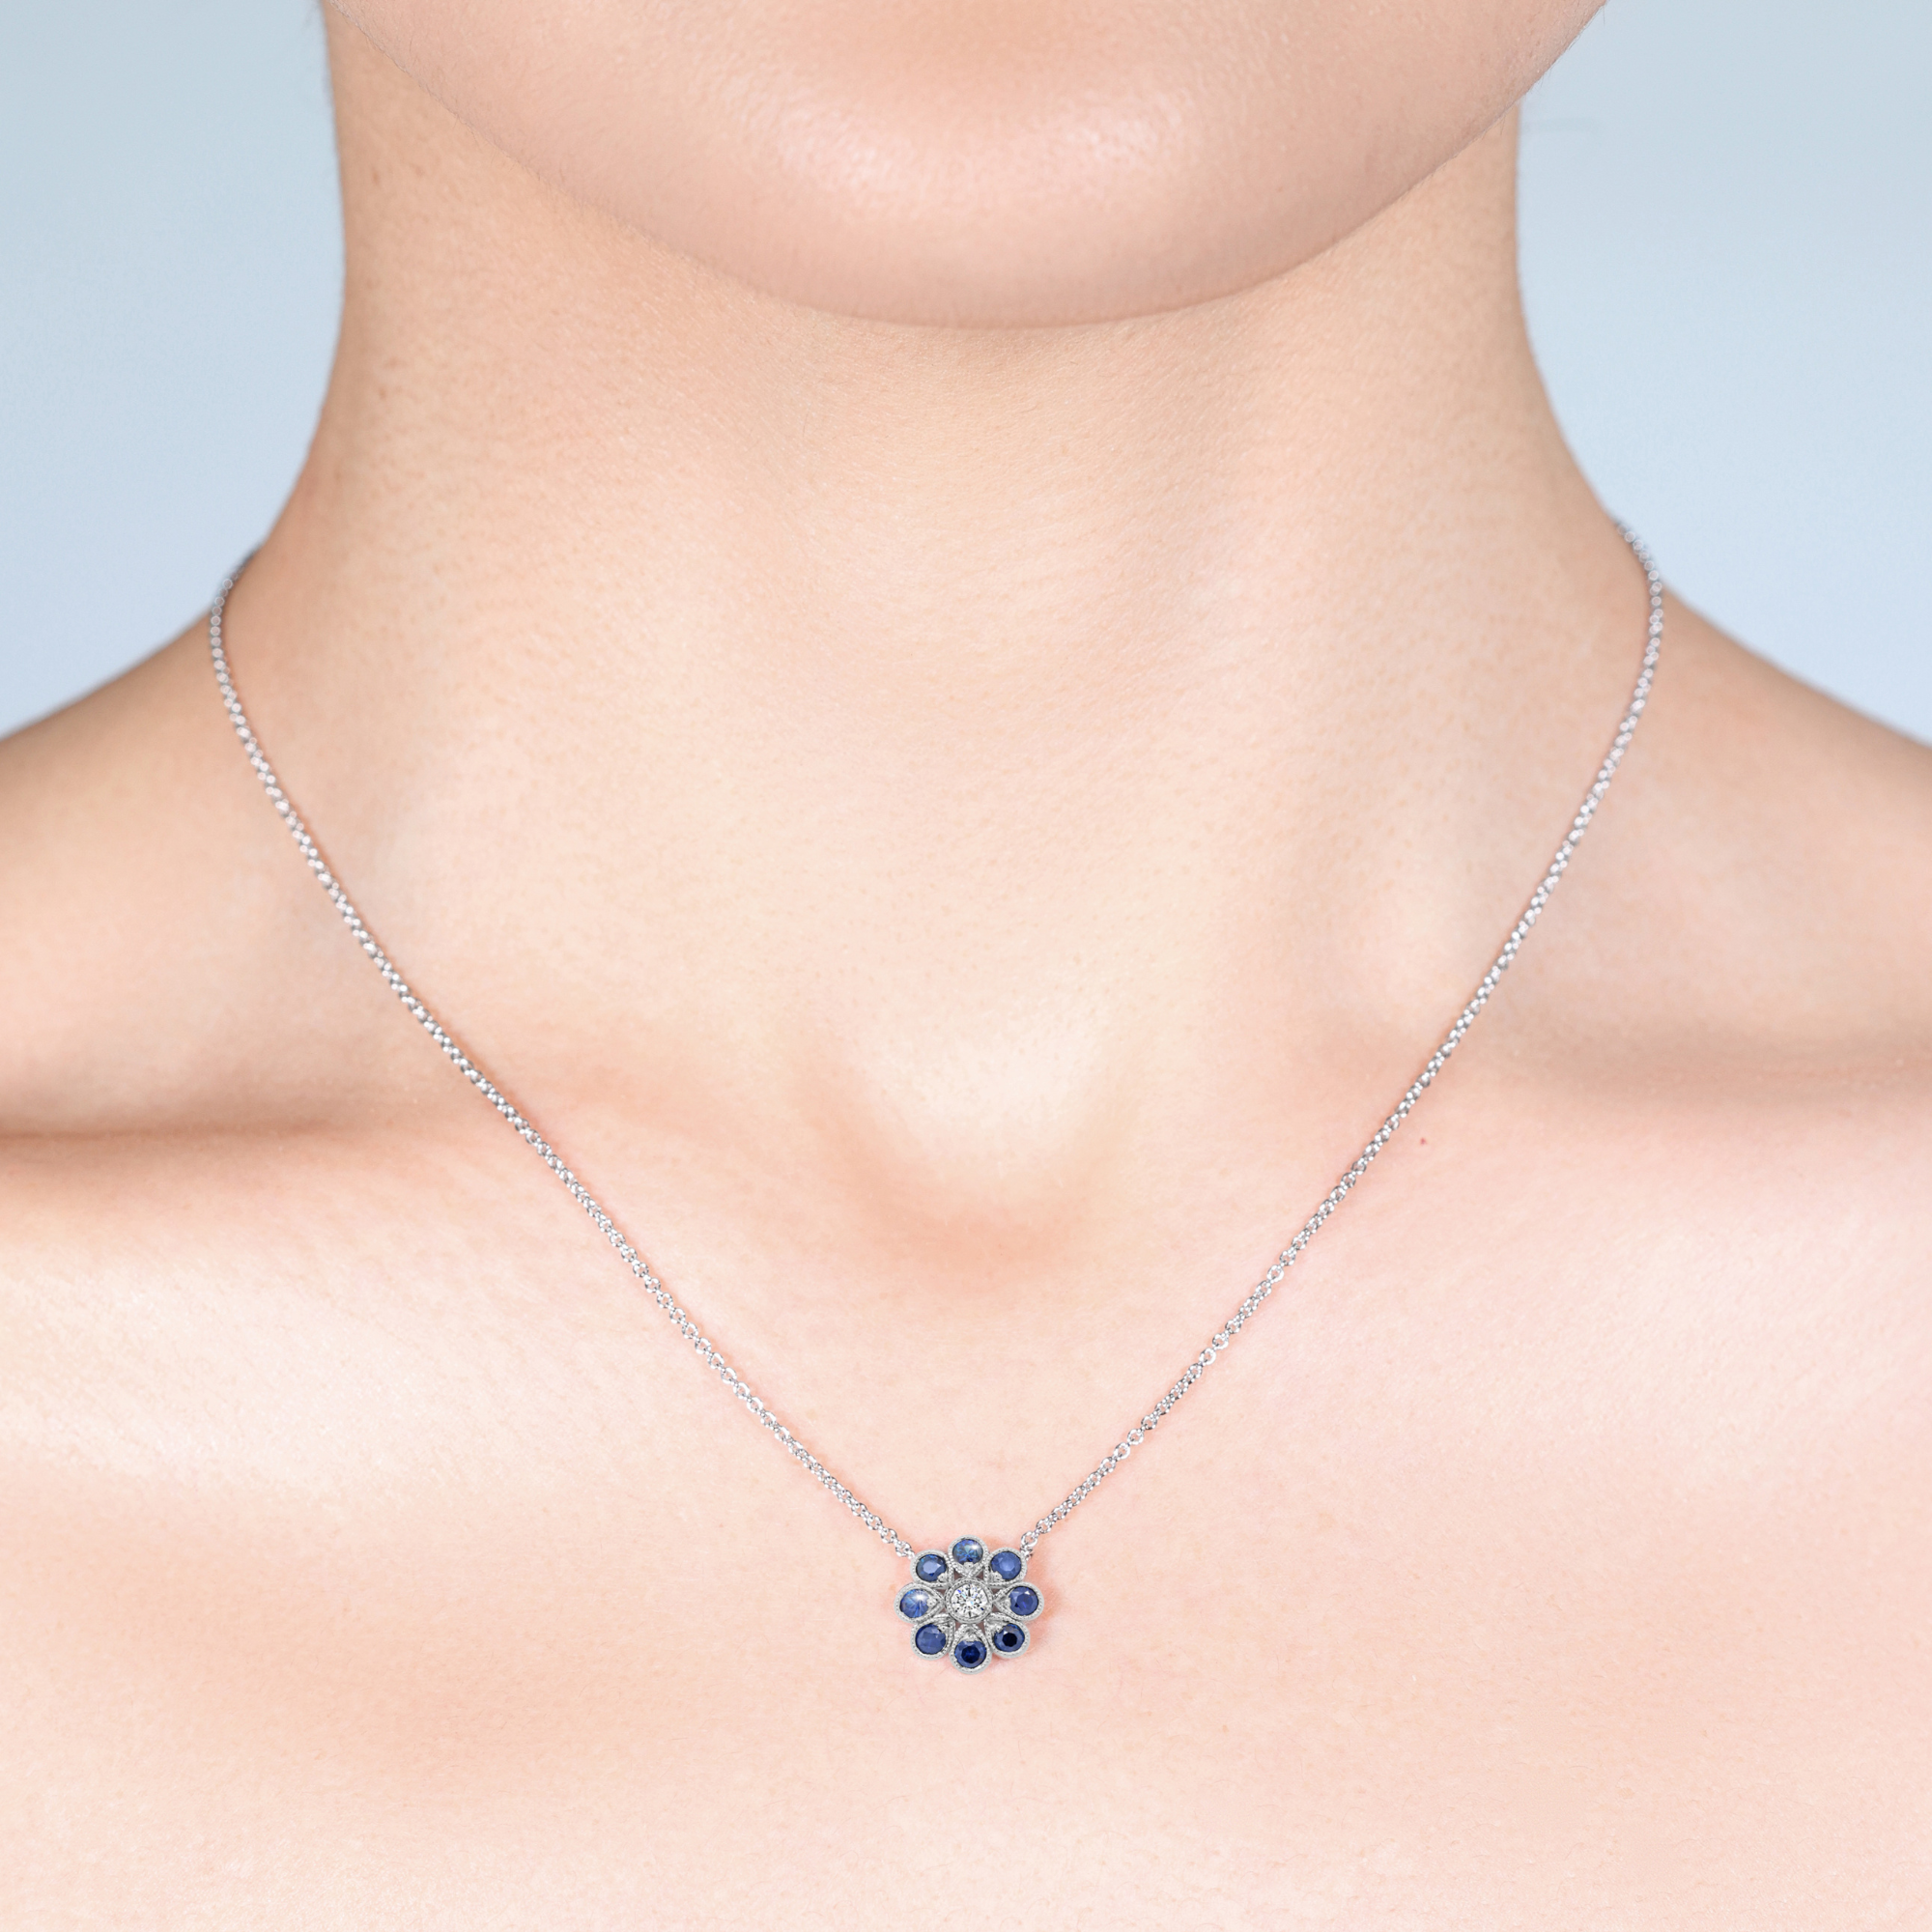 Deco Daisy Large Ceylon Sapphire & Diamond Necklace - 18ct White Gold